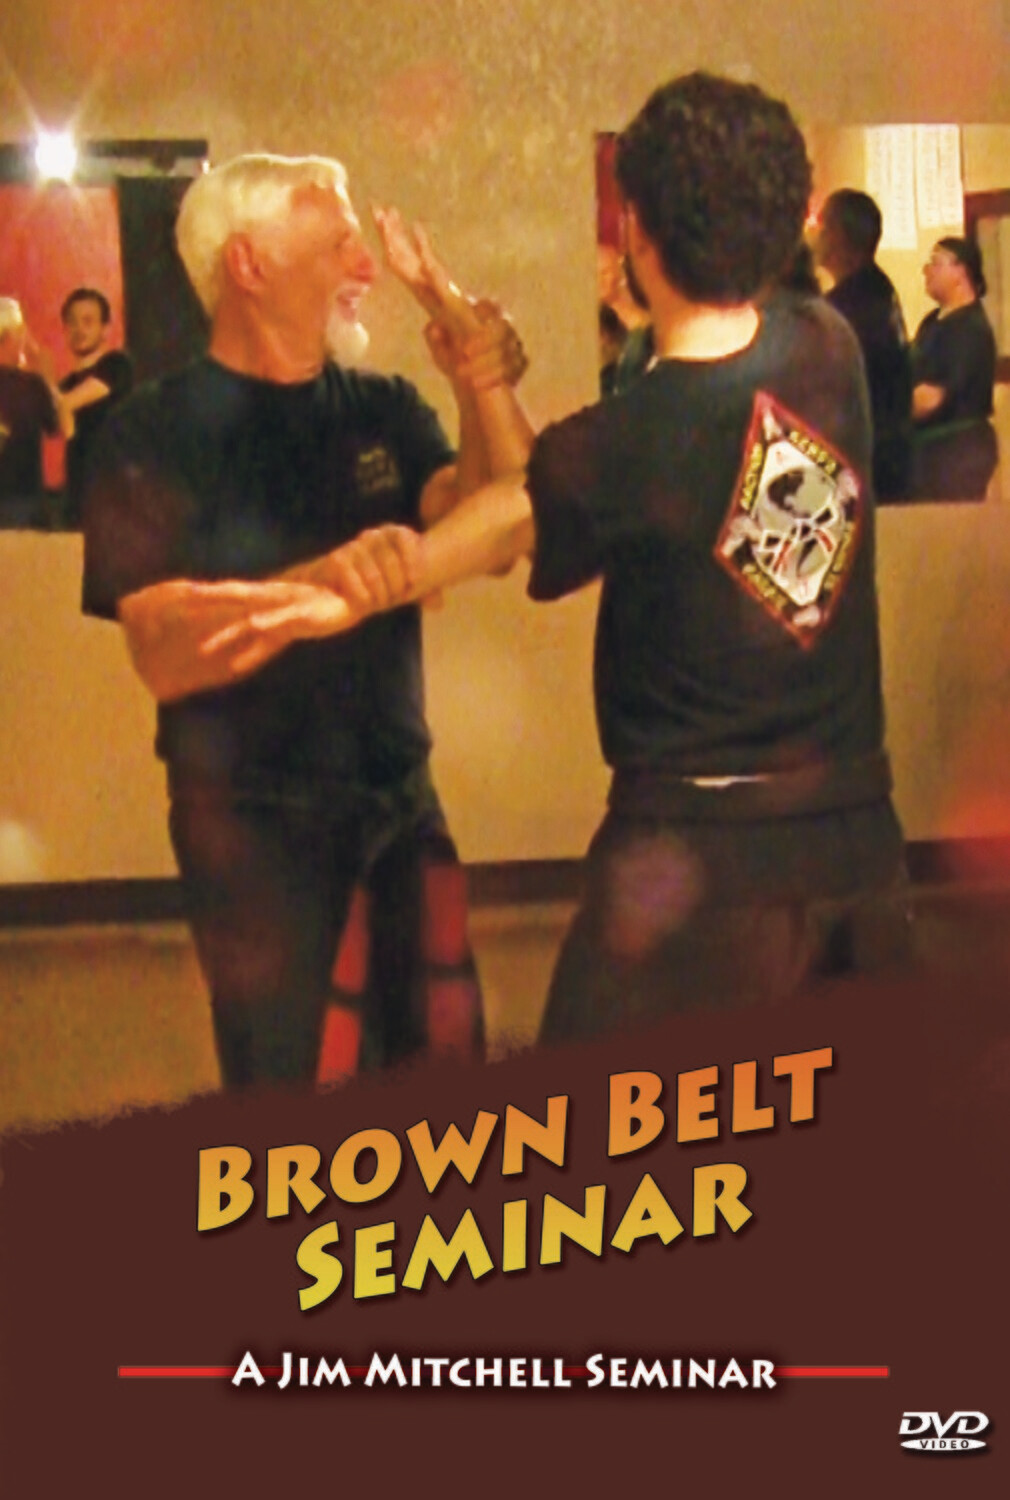 Brown Belt Seminar DVD